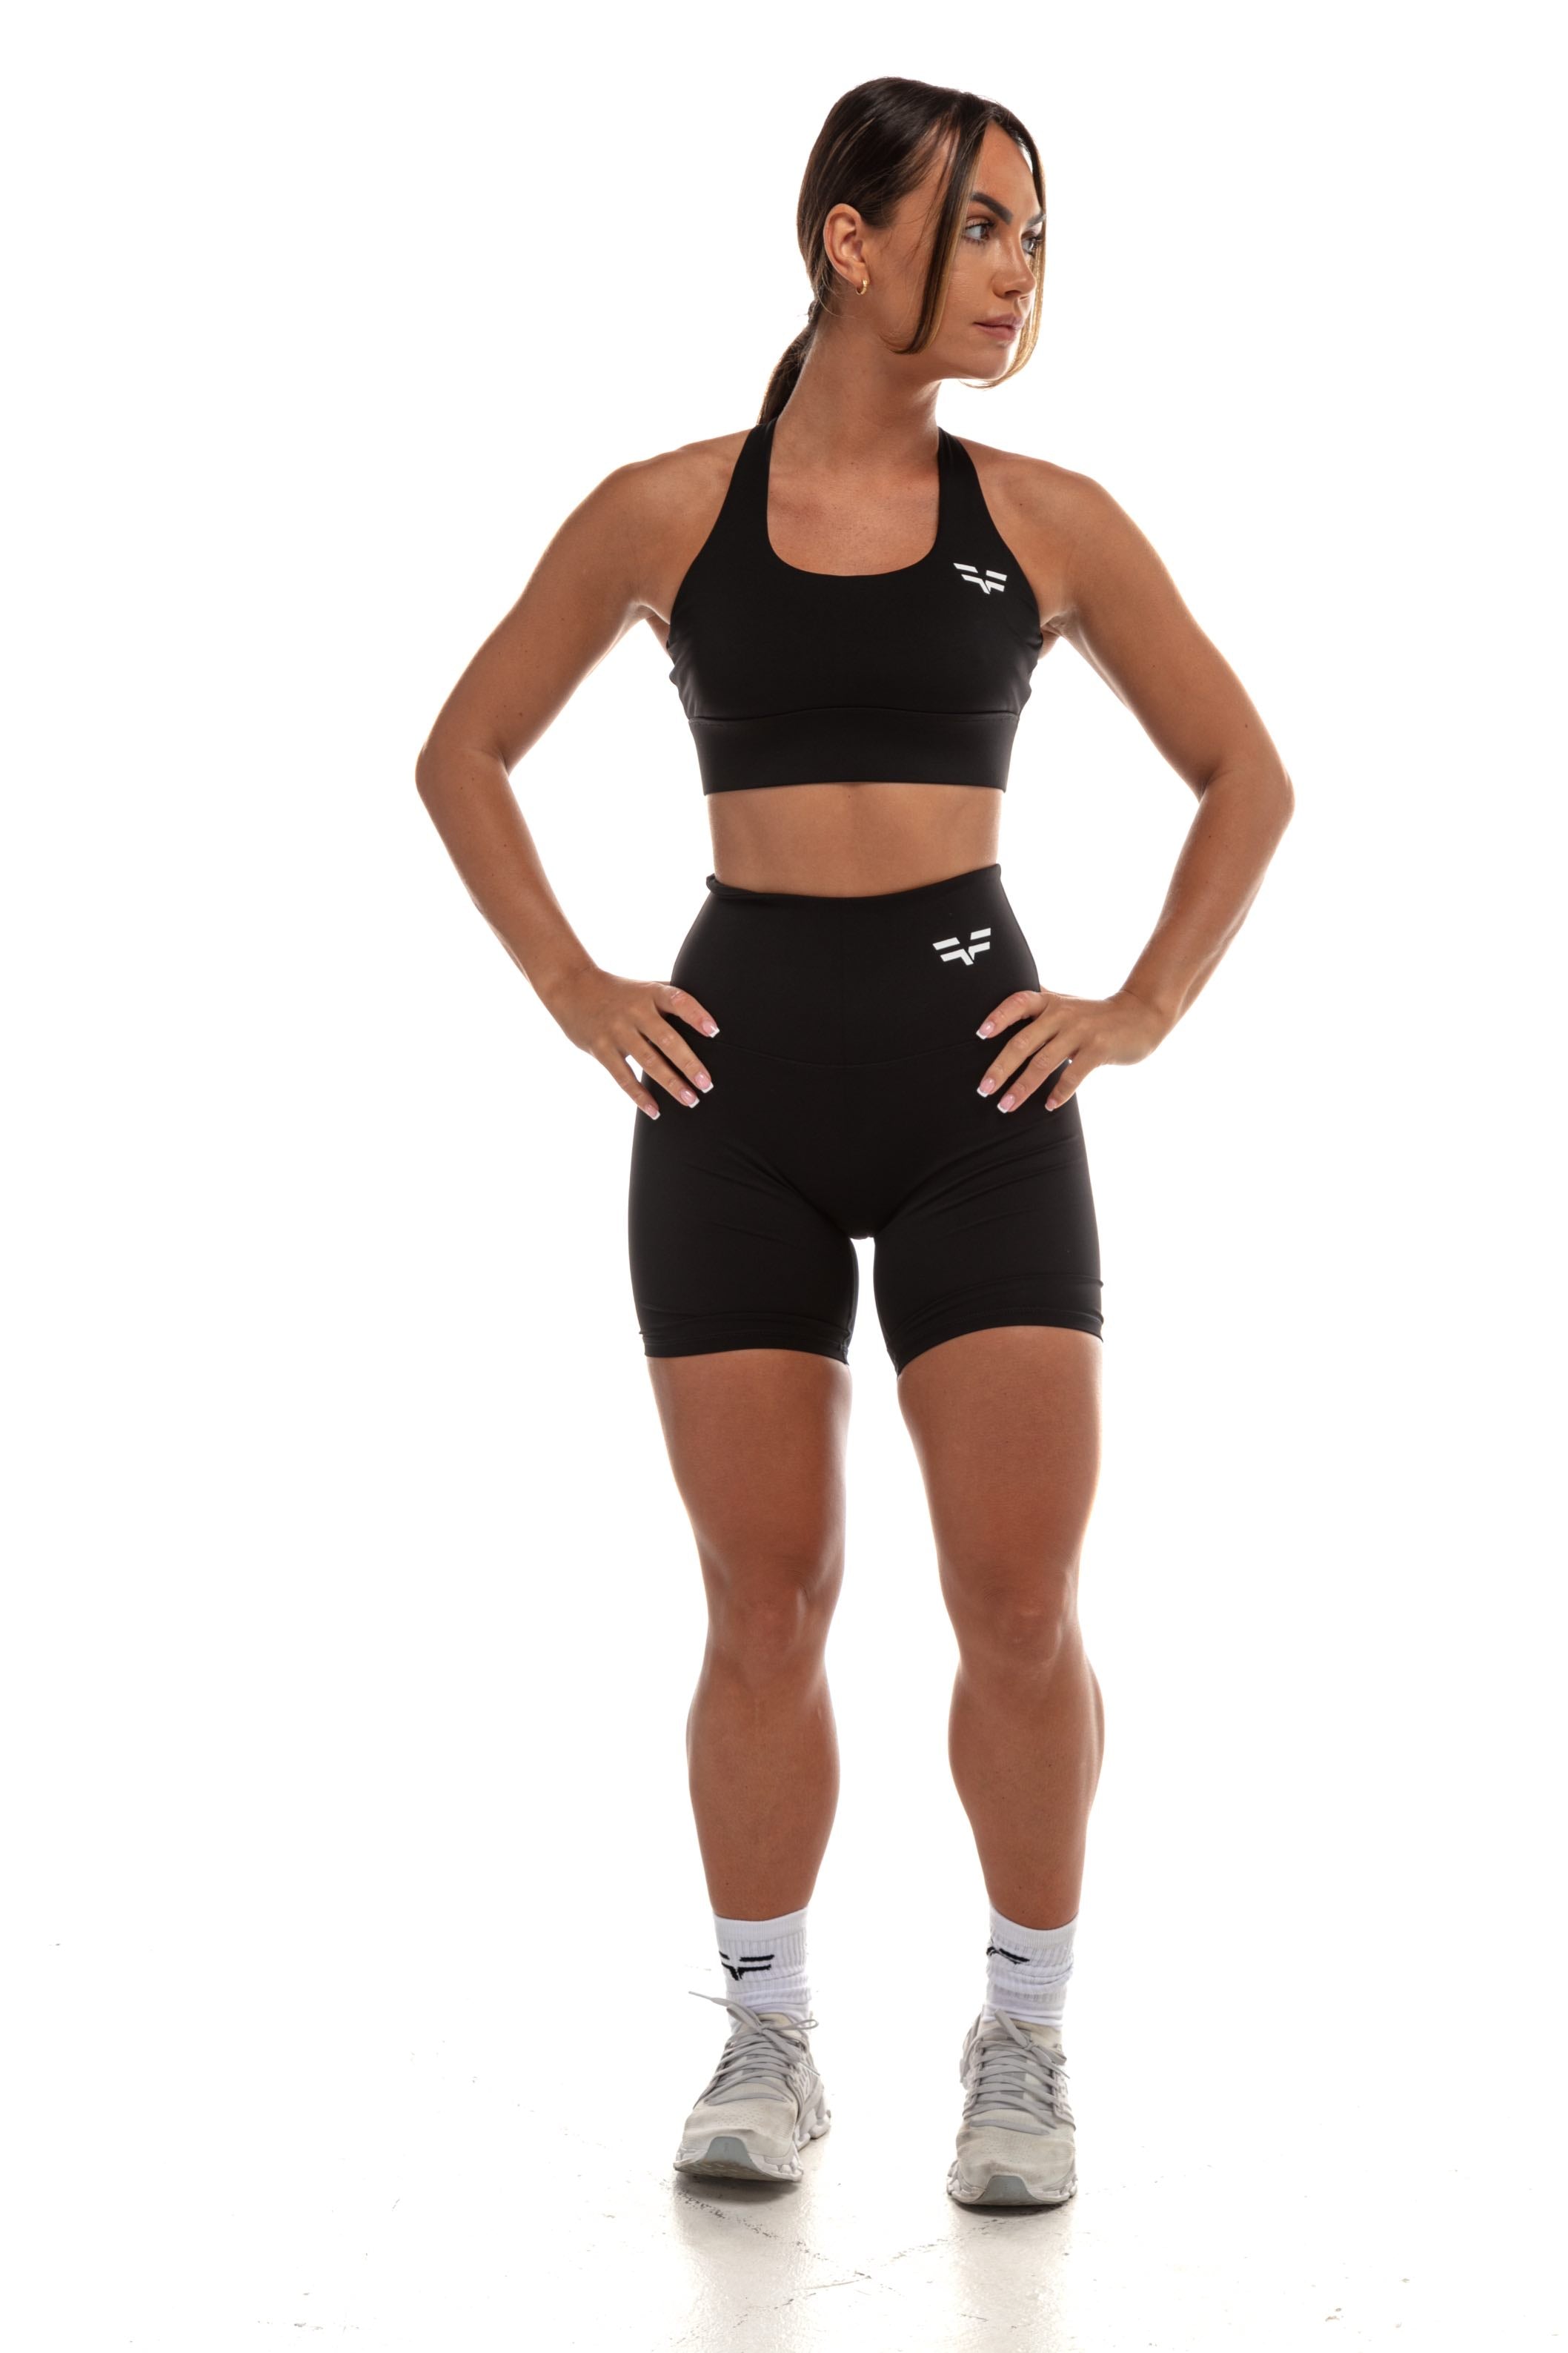 GymFreak Women's Vision Shorts - 6 inch Black